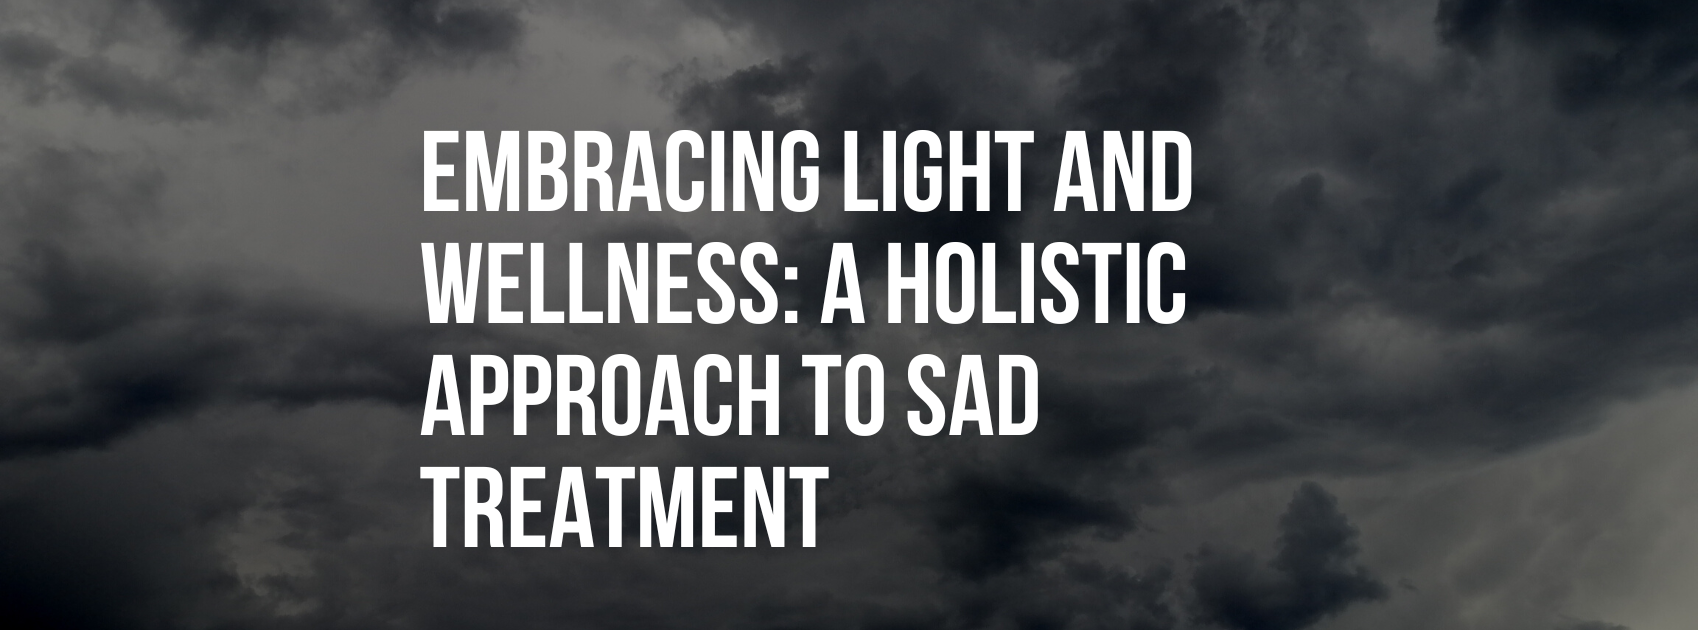 Embracing Light and Wellness: a Holistic Approach to SAD Treatment